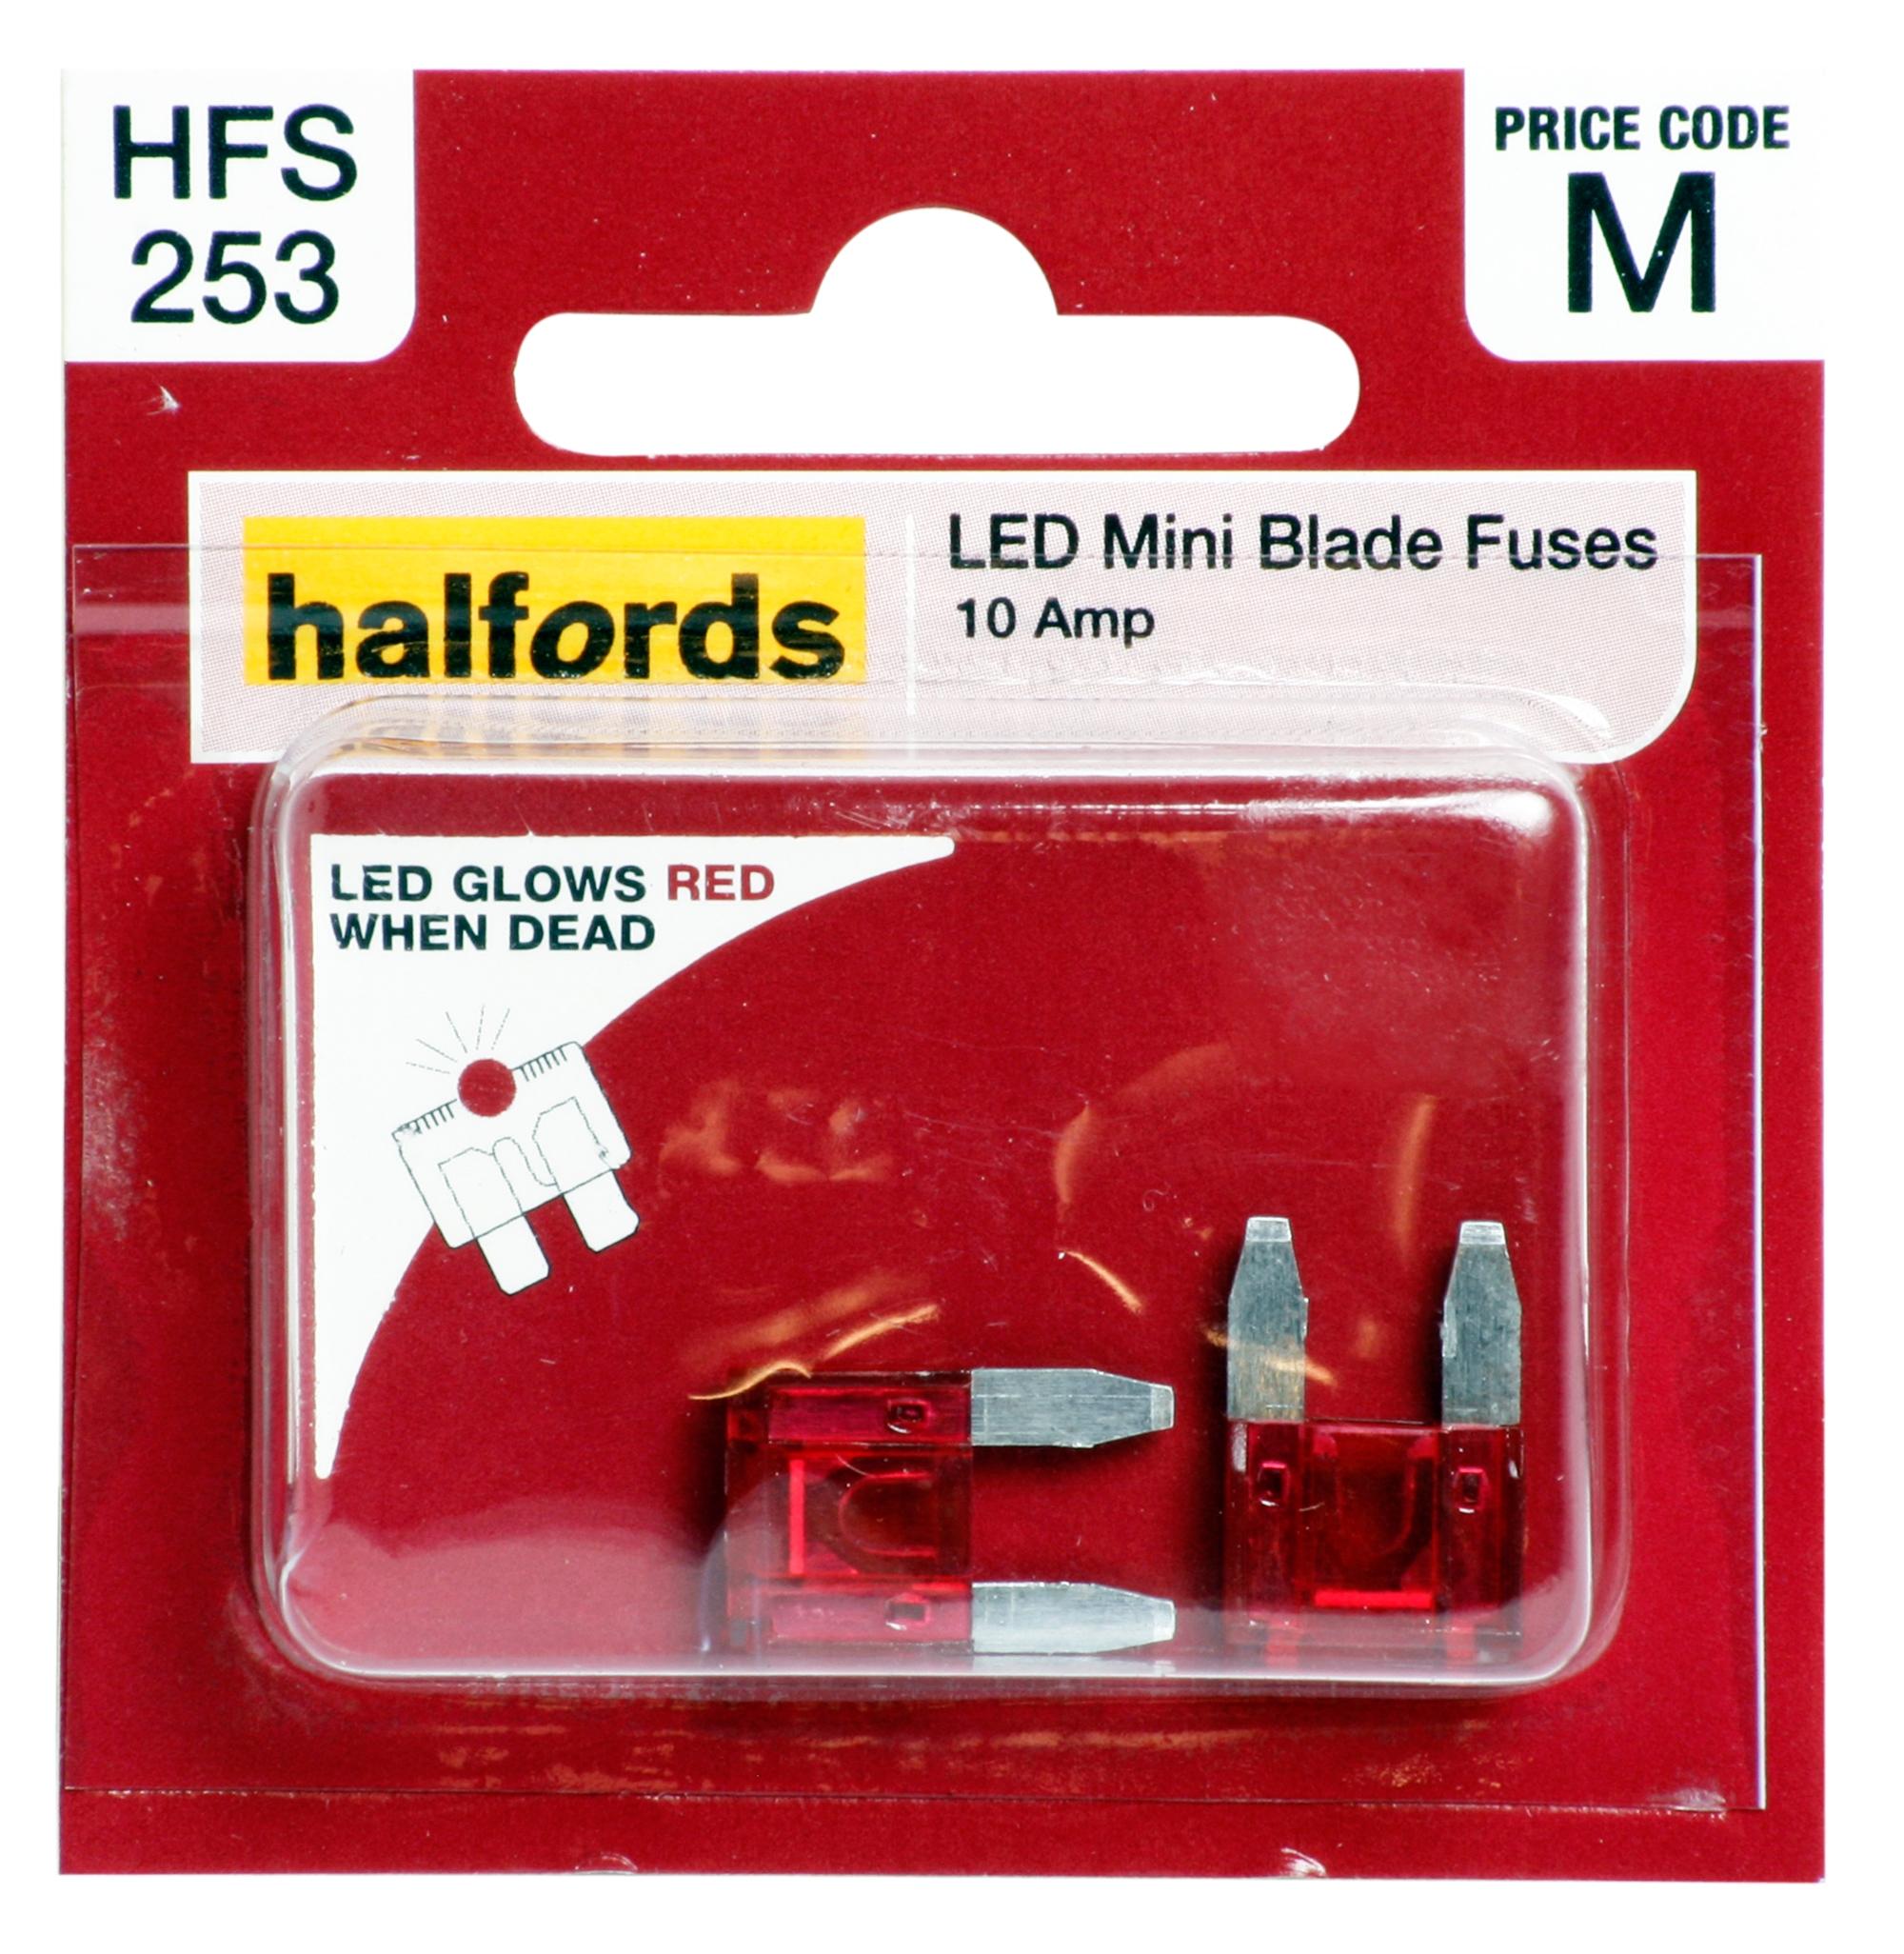 Halfords Led Mini Blade Fuses 10 Amp (Hfs253)